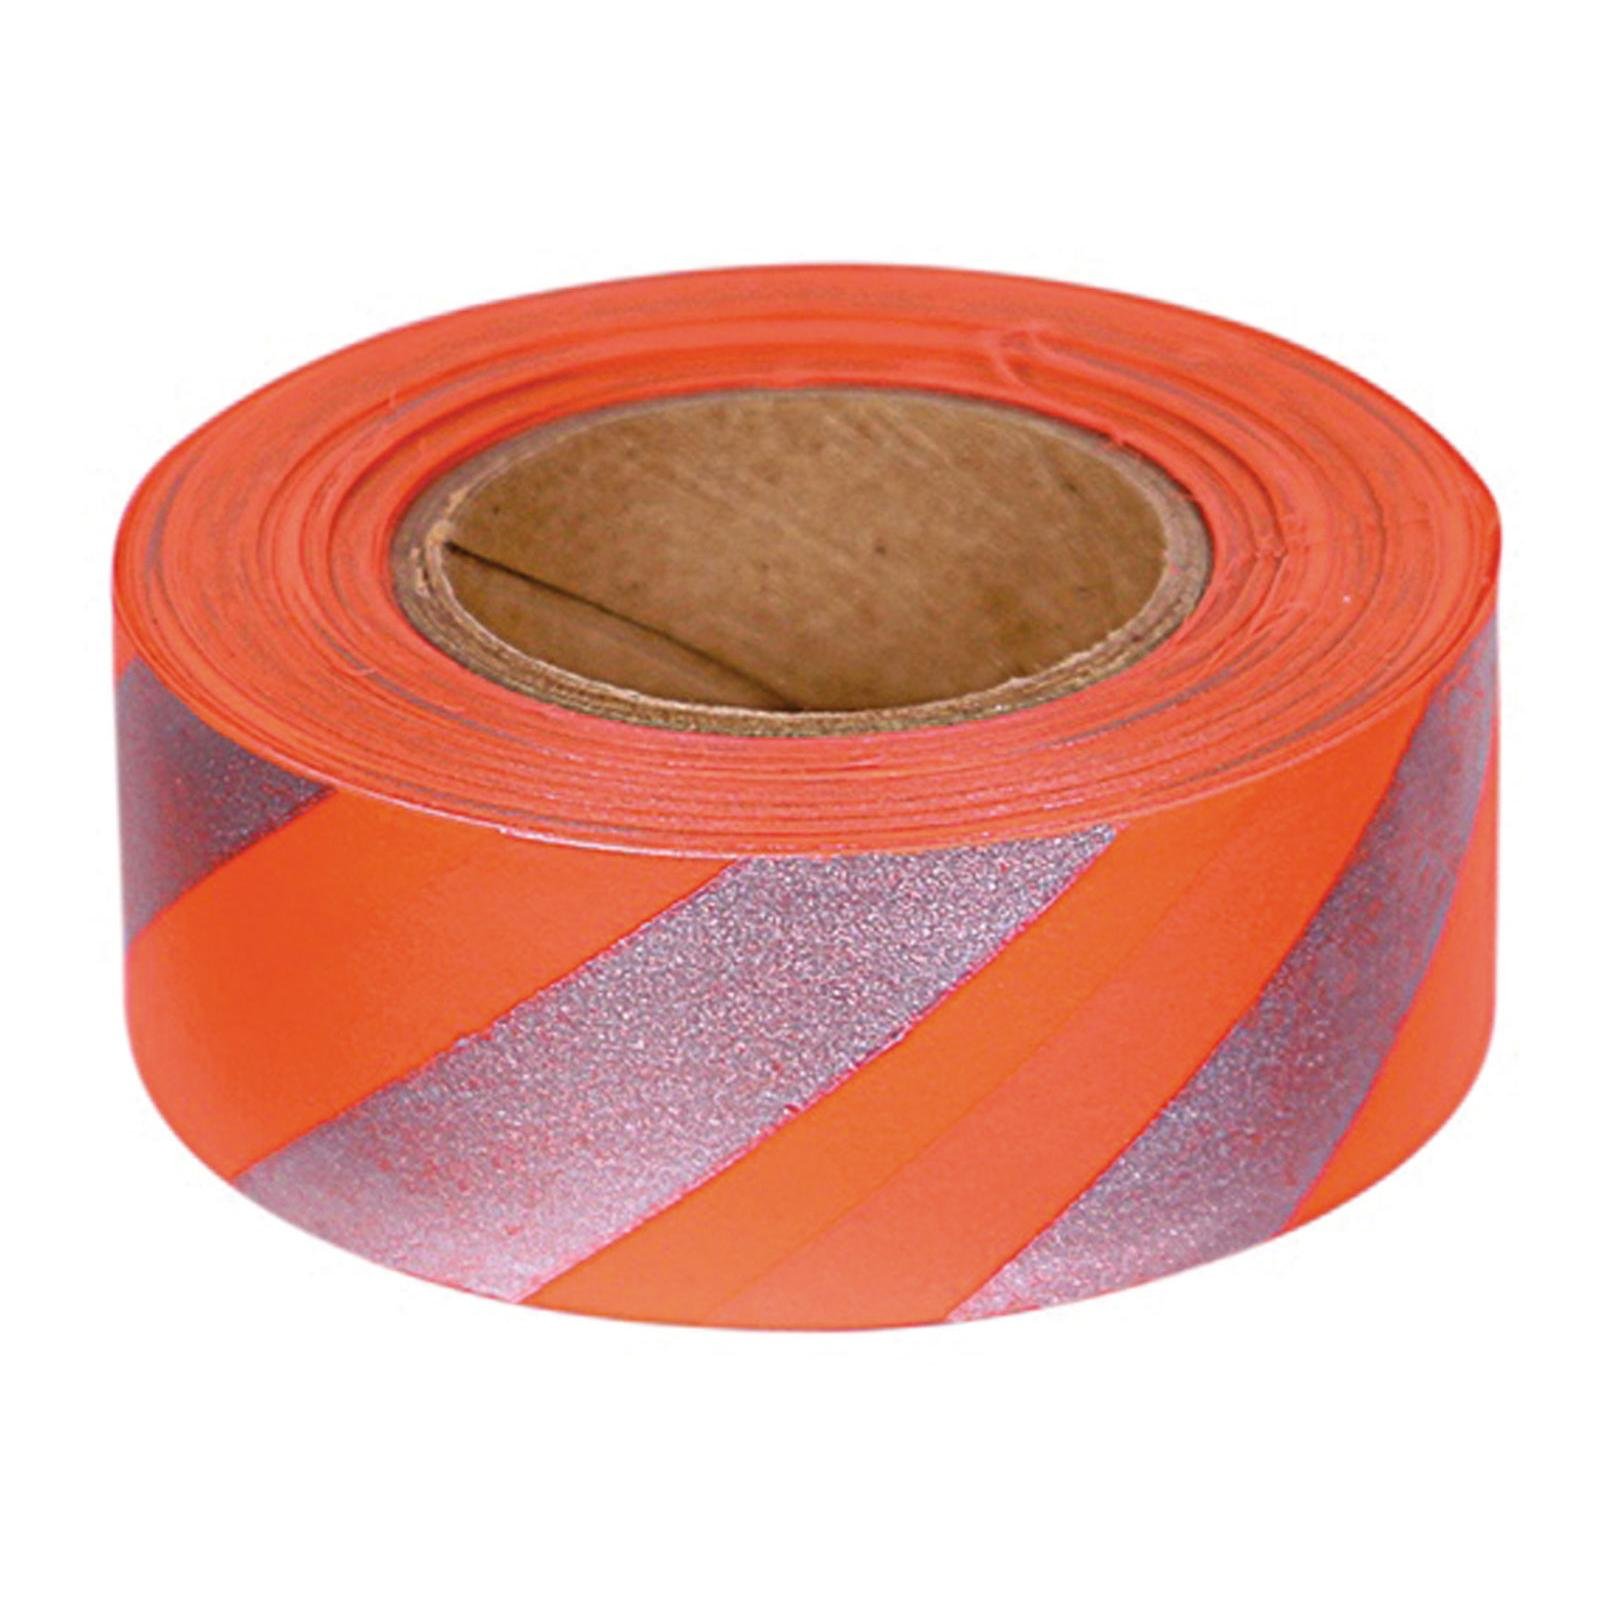 Snitselband plast med reflex. 25 mm x 45 m. orange